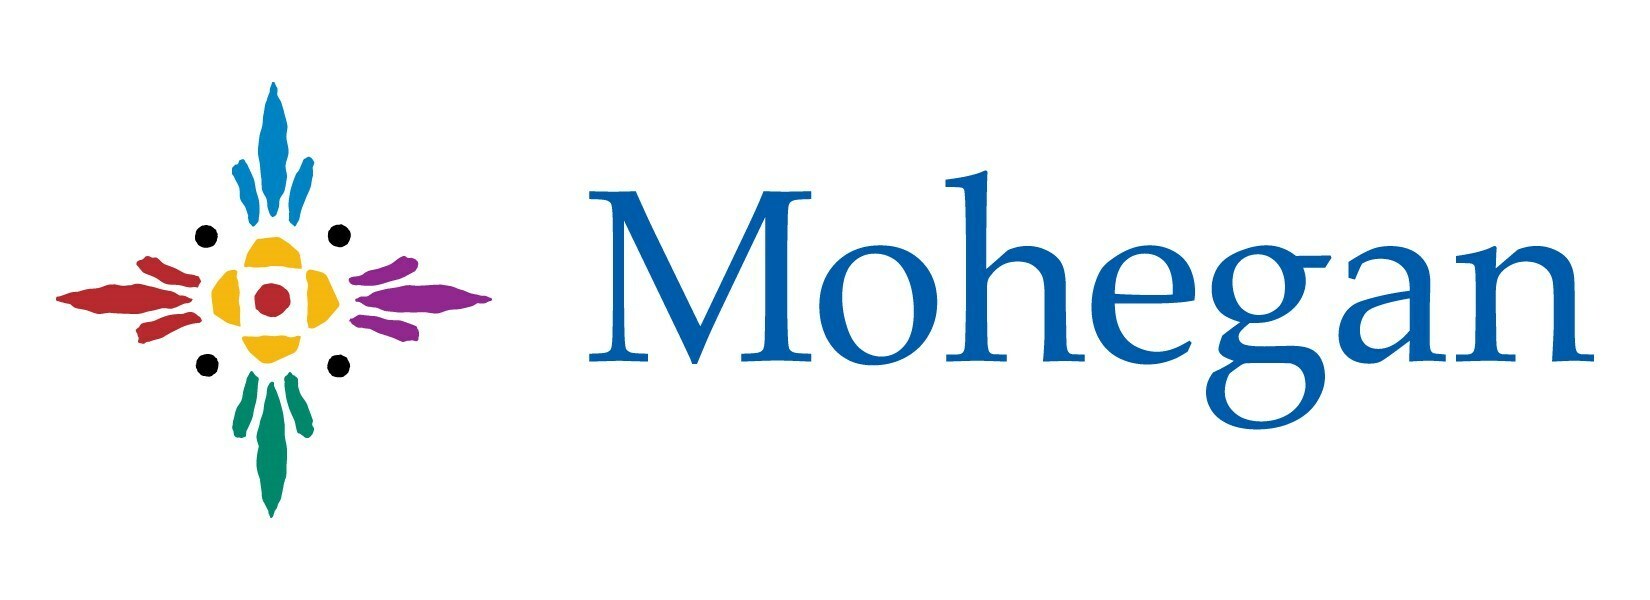 Mohegan logo (PRNewsfoto/Mohegan)